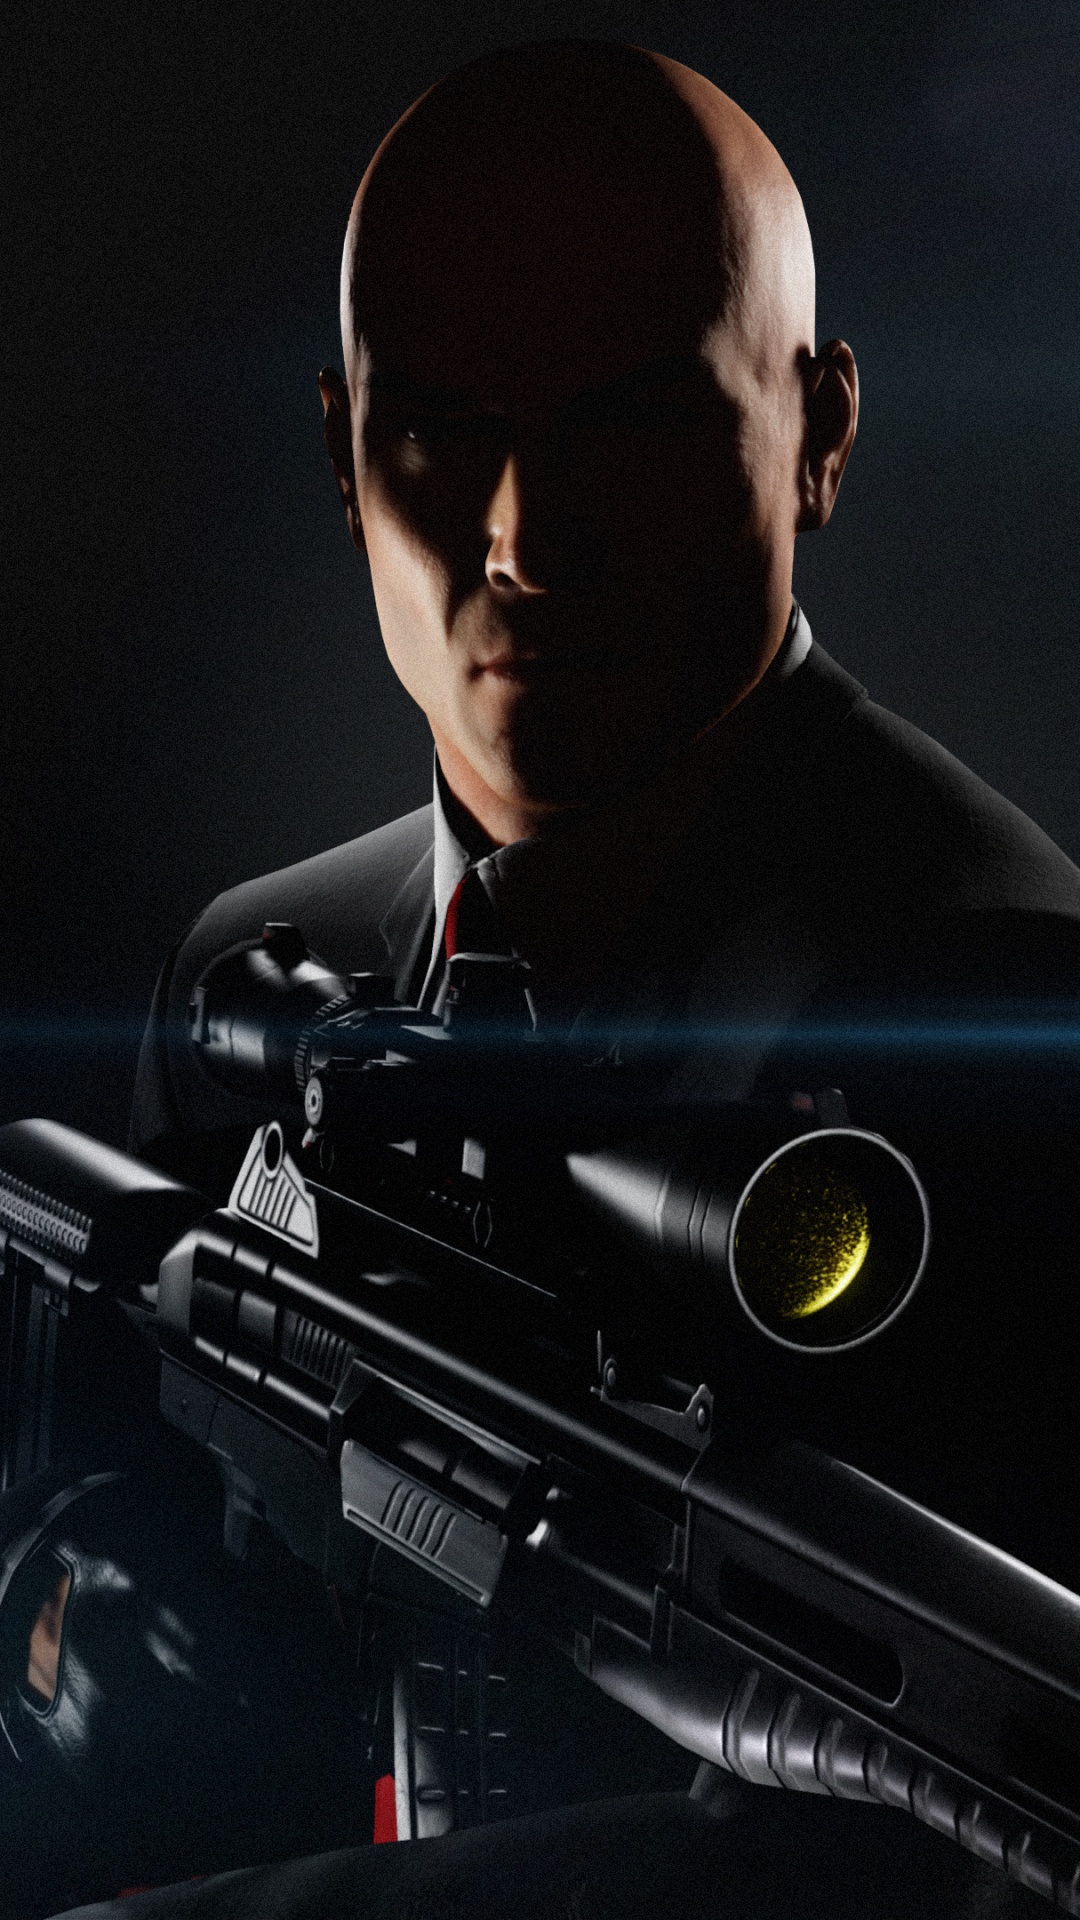 Sniper Elite 5 Wallpapers - Top 20 Best Sniper Elite 5 Backgrounds Download